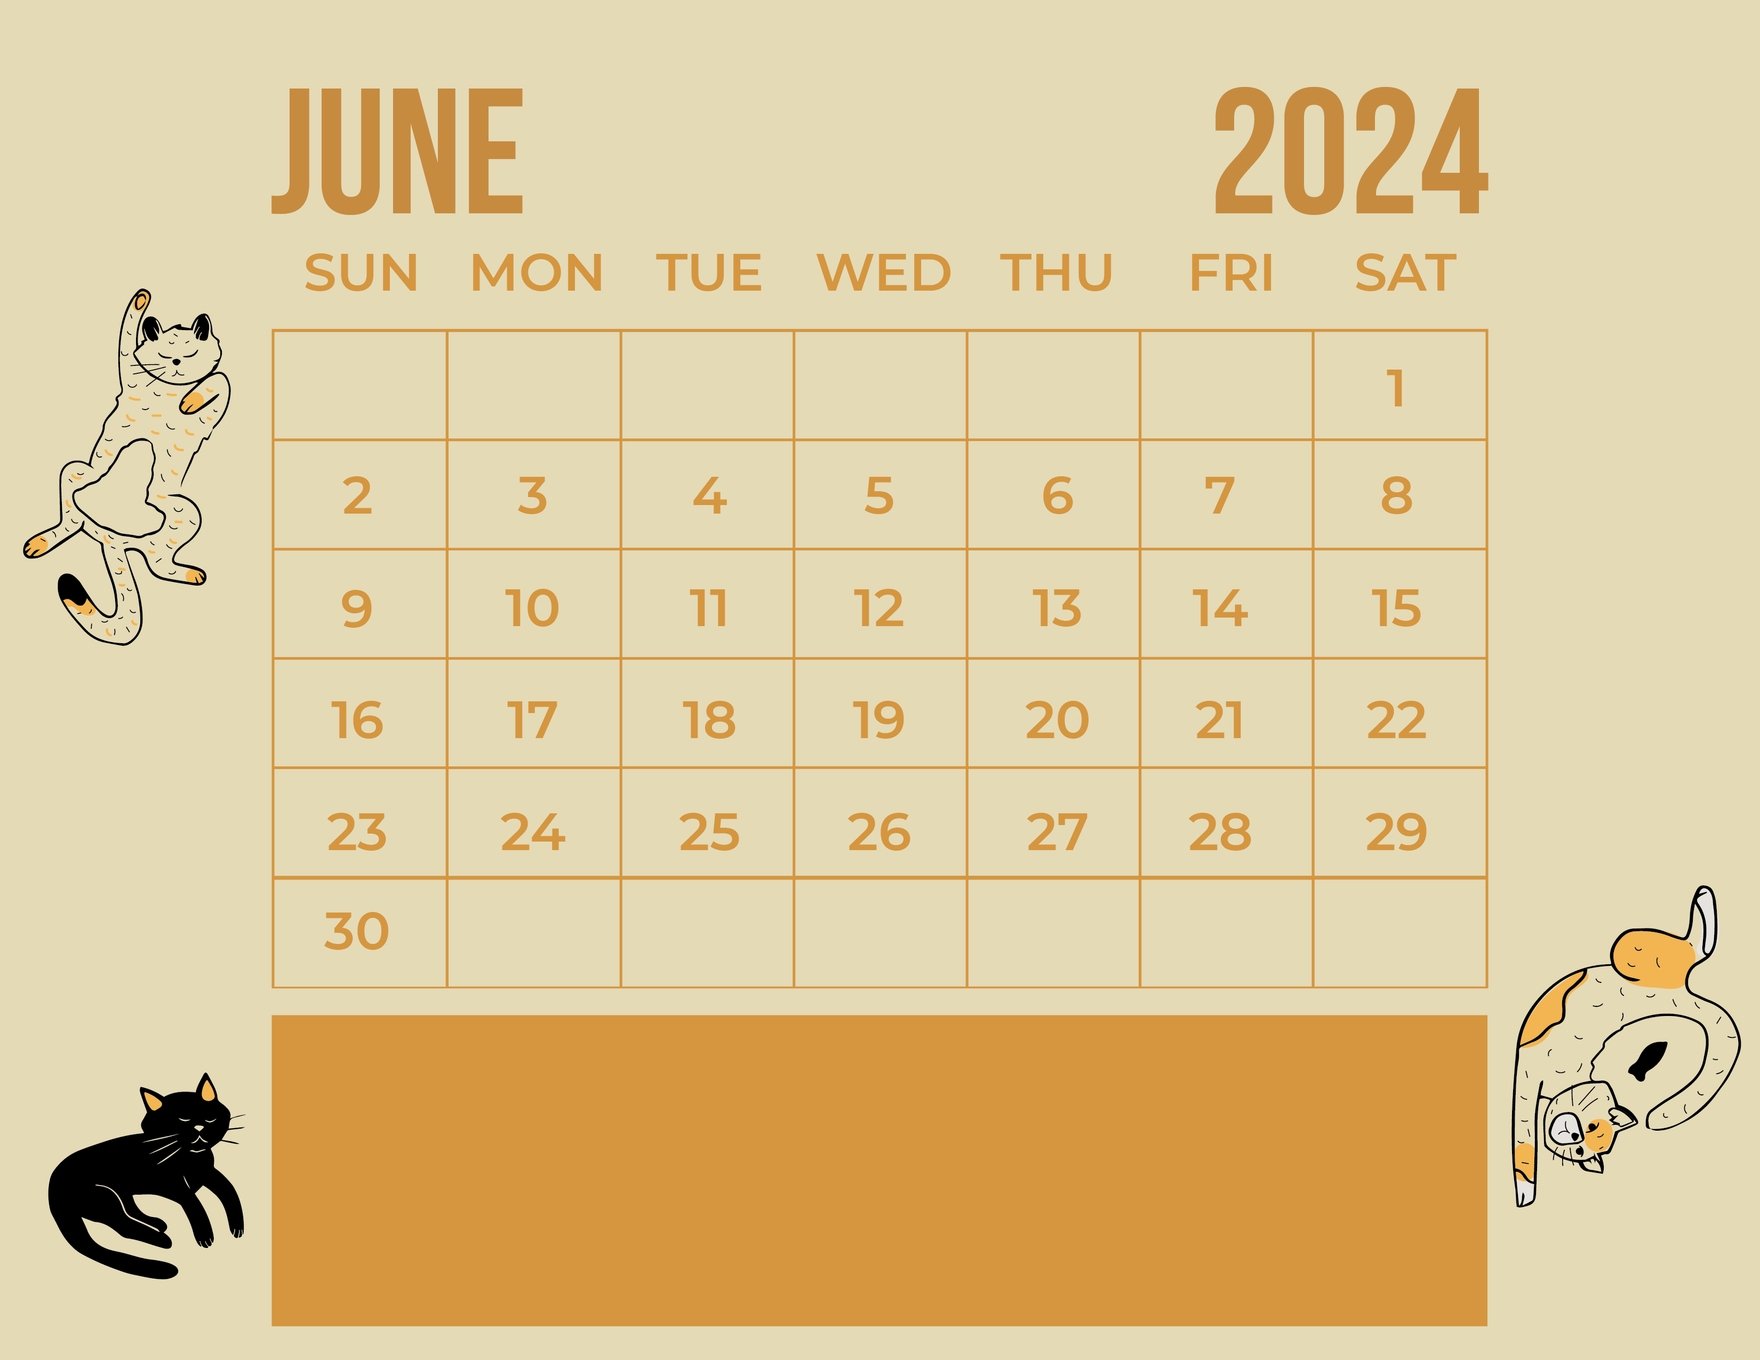 Free Blank June 2024 Calendar in Word, Illustrator, EPS, SVG, JPG